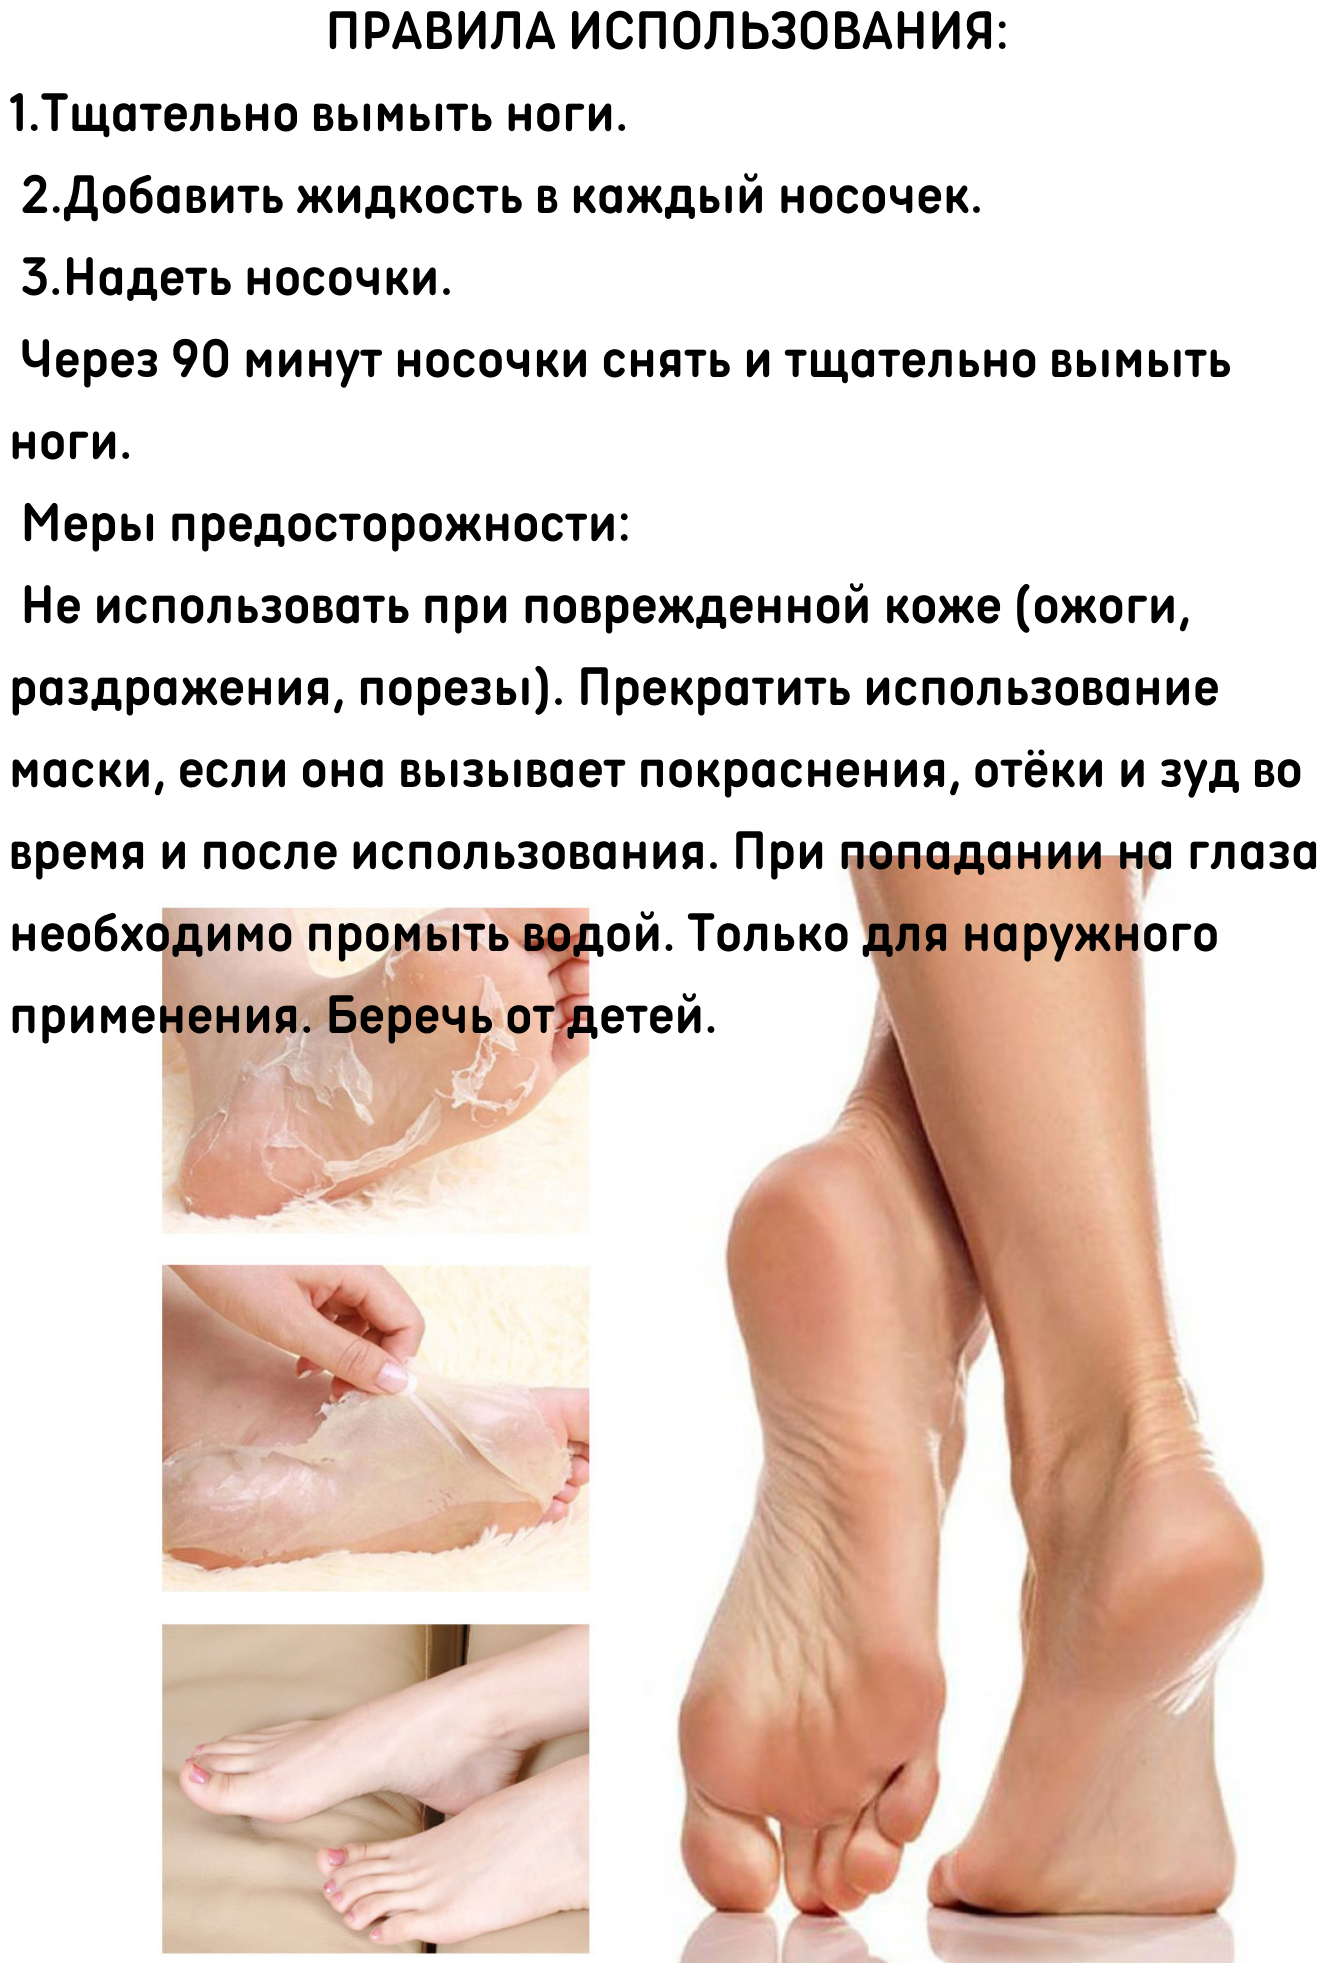 Jigott Маска-носки для пилинга Clean & moisturizing, 40 мл, 50 г, 1 уп.